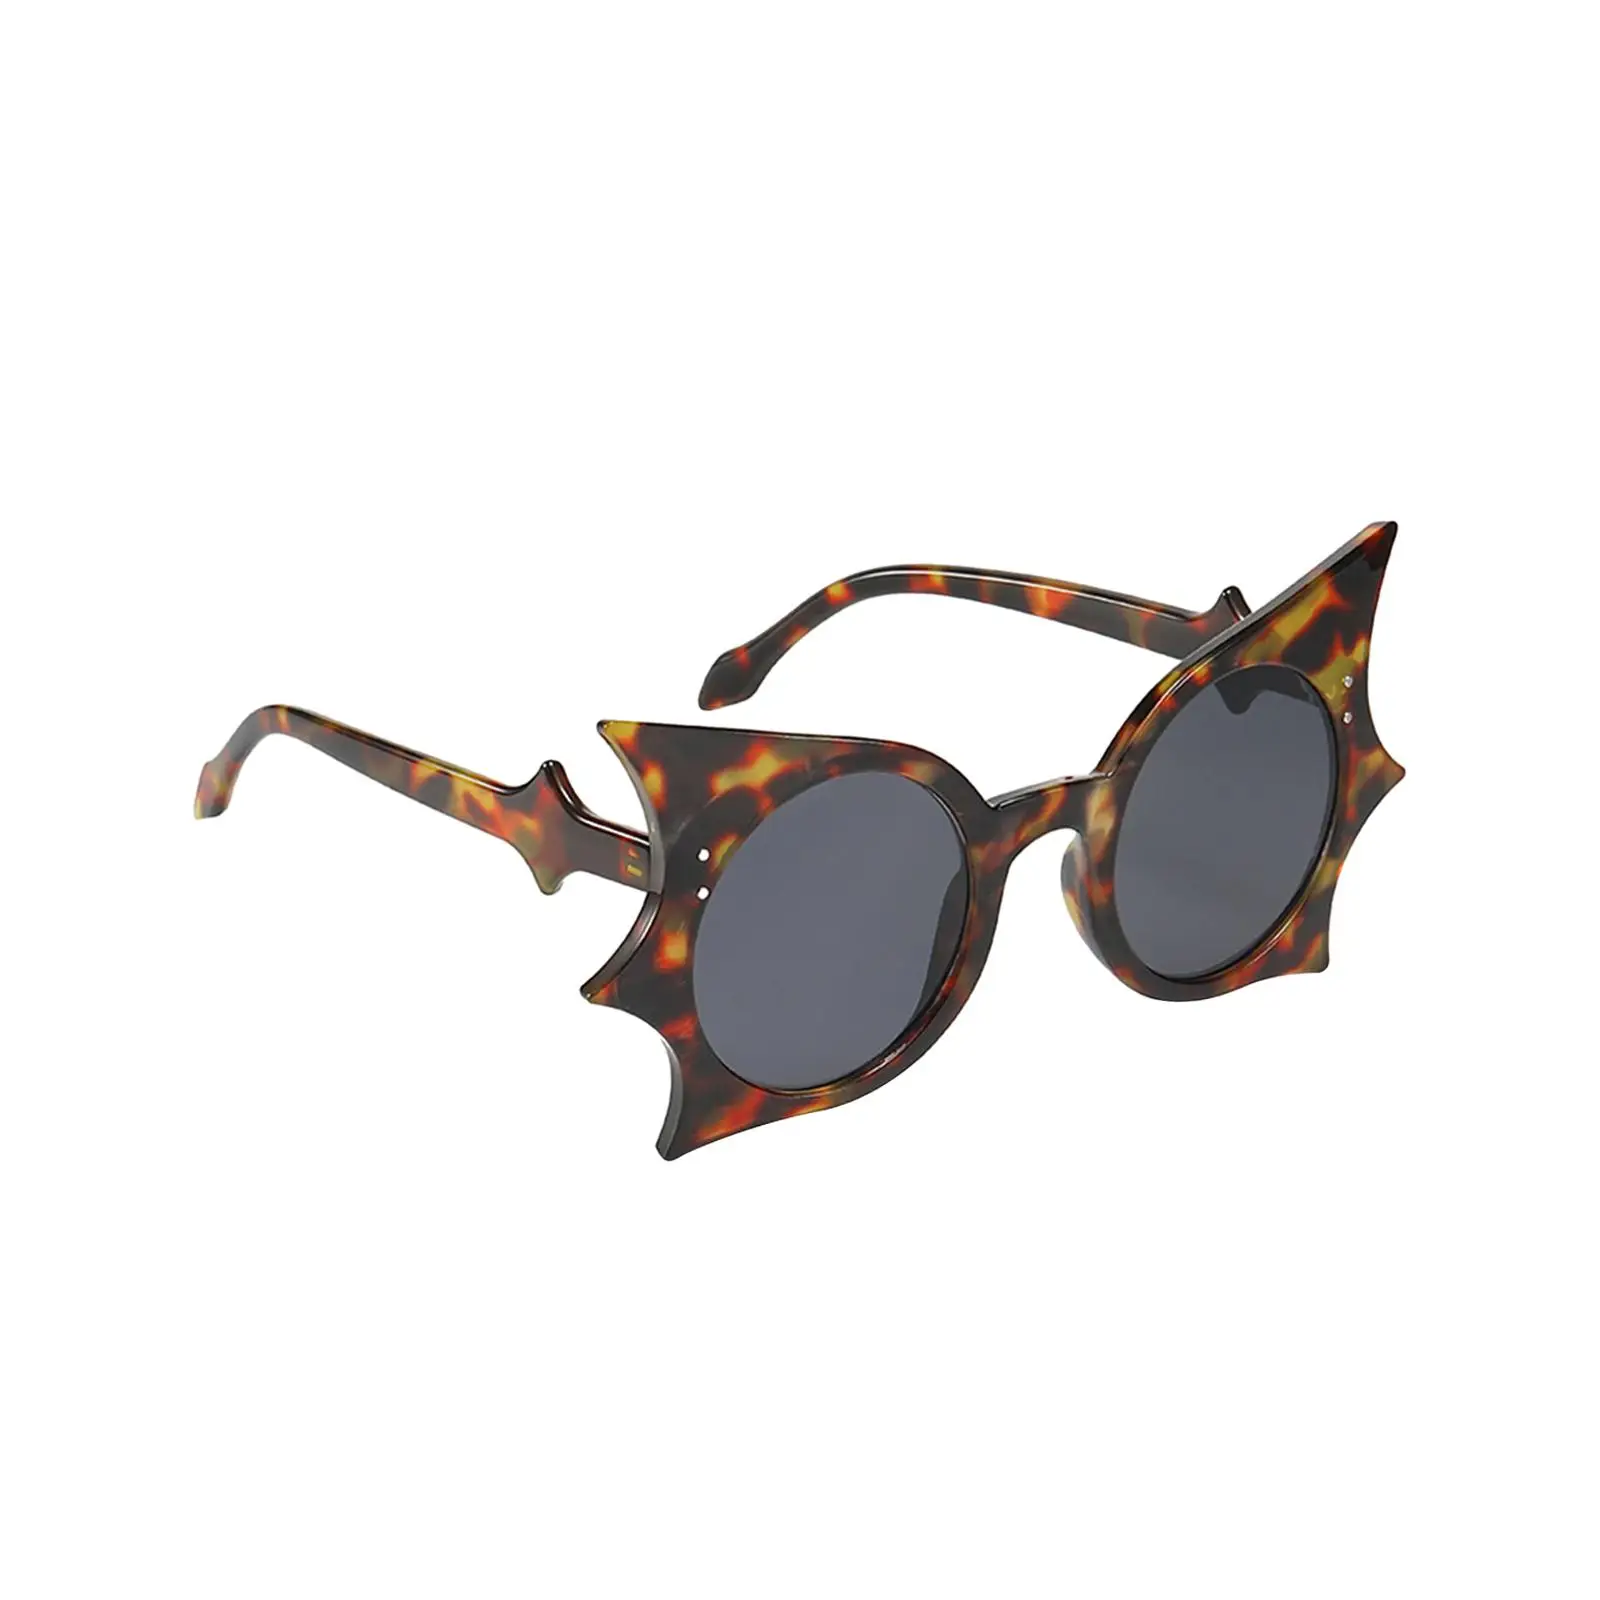 Bat Shape Sunglasses Costume Accessories Eyewear for Travel Vacation Hiking